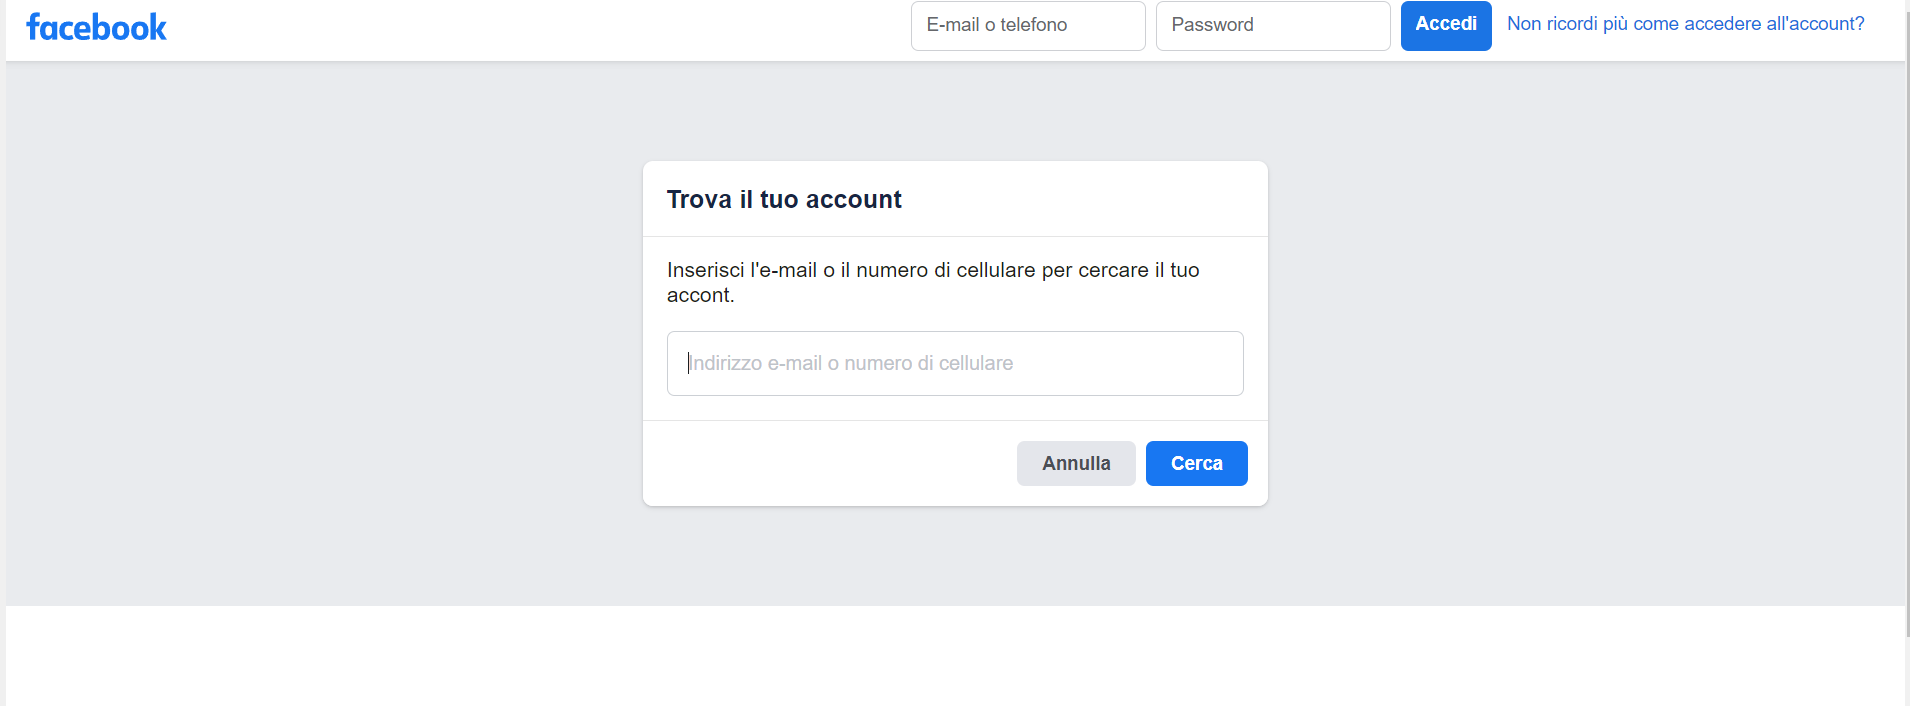 Facebook login senza password